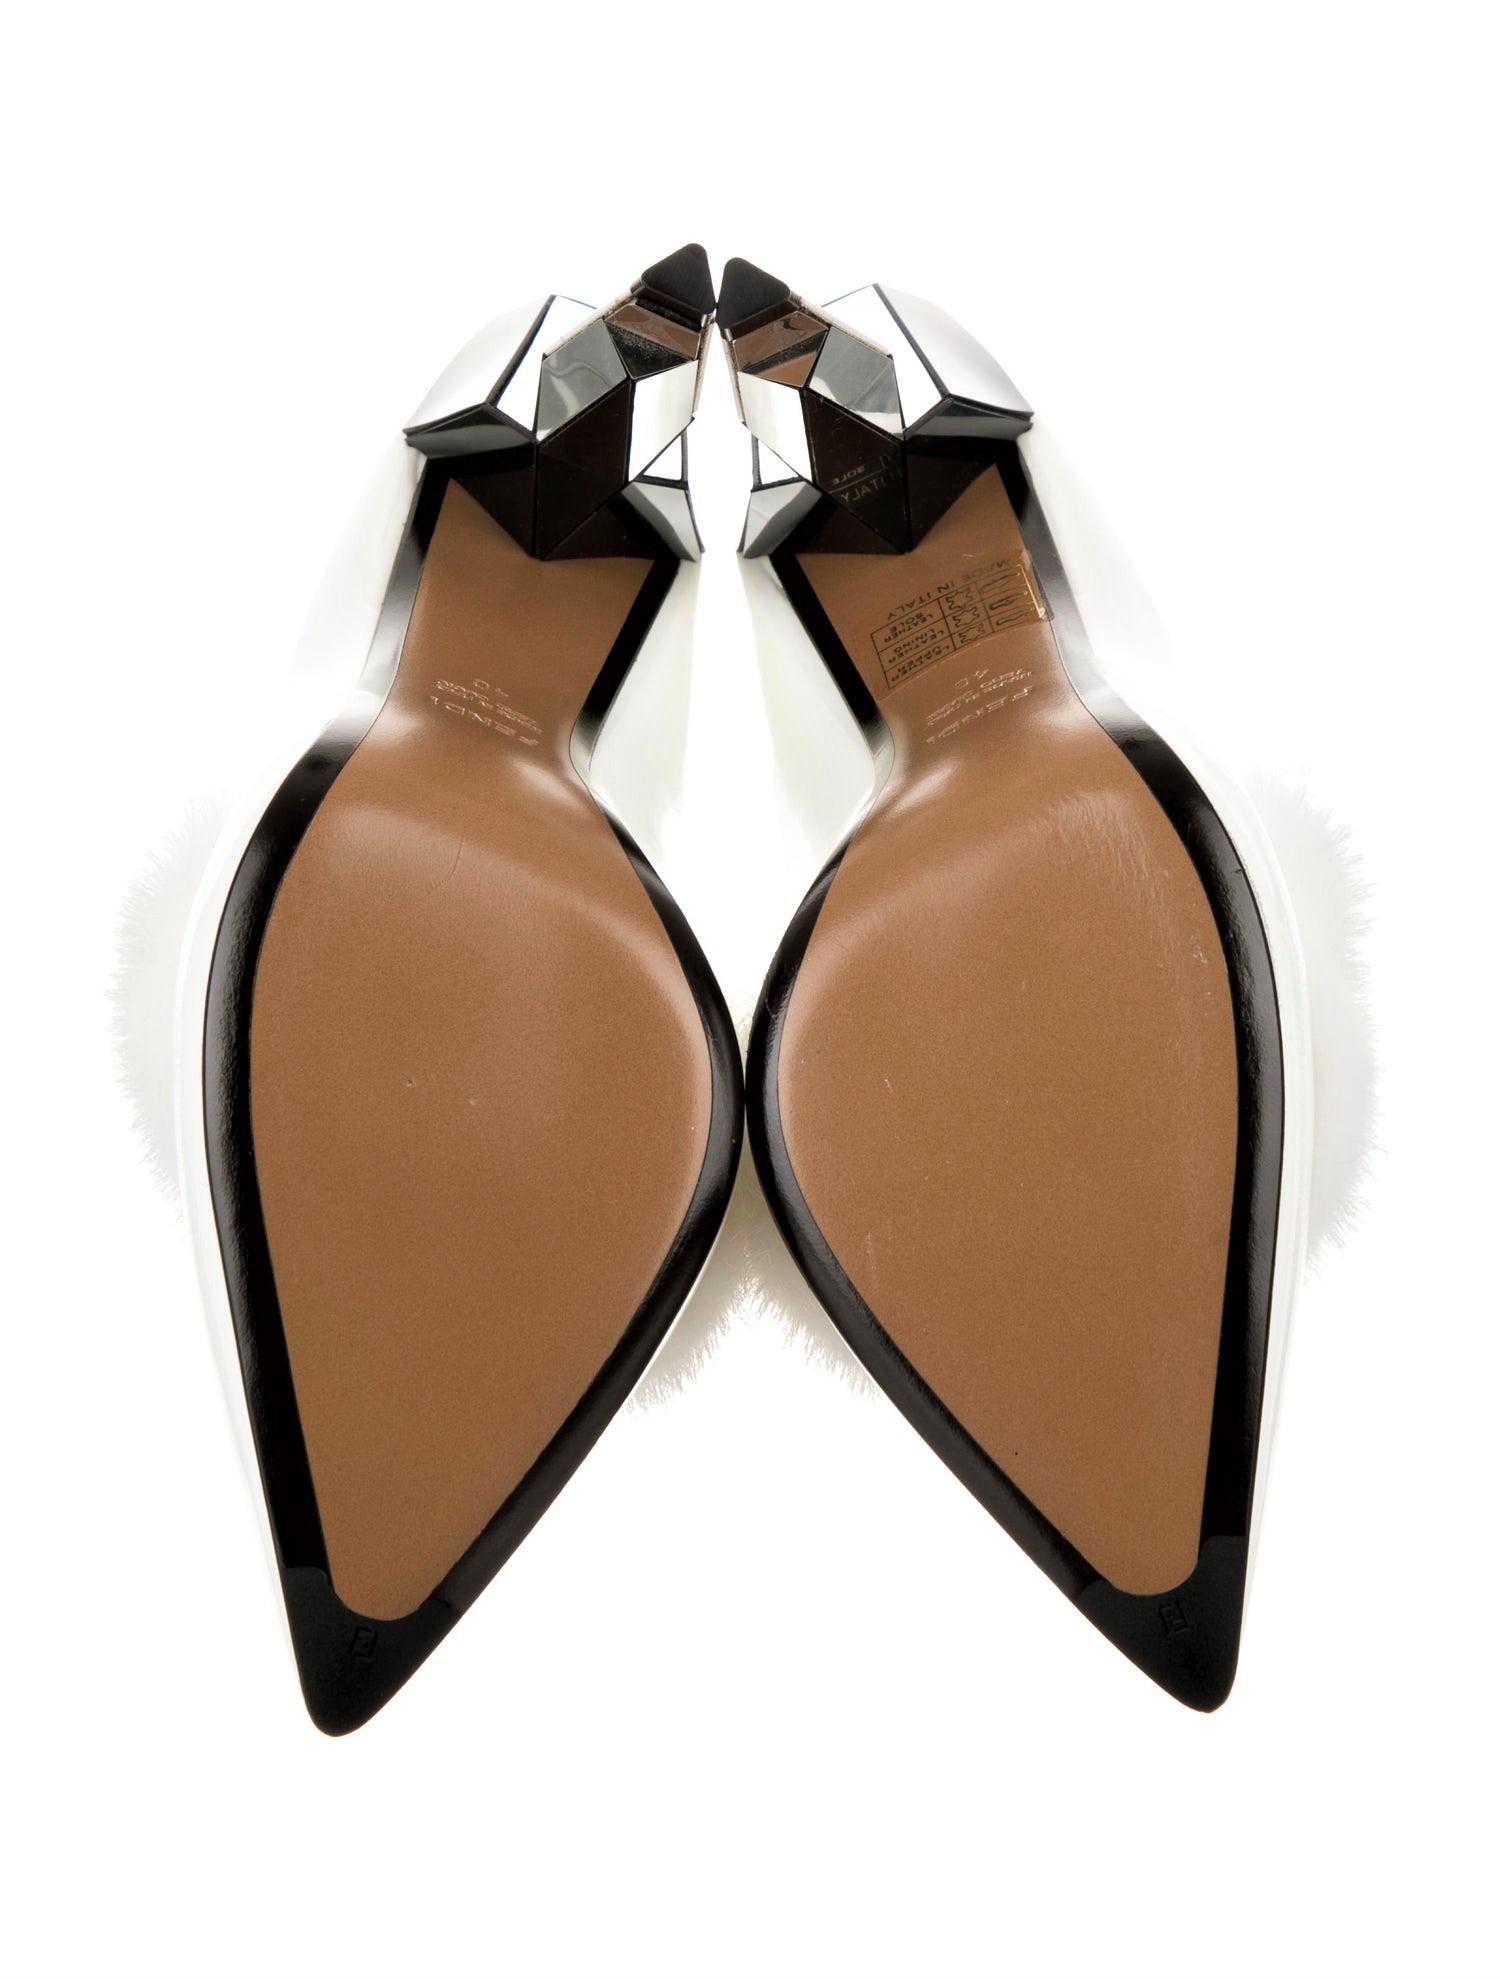 New Fendi Karl Lagerfeld Rare Runway Art Deco Leather Fox Fur Booties Pump Sz 40 14